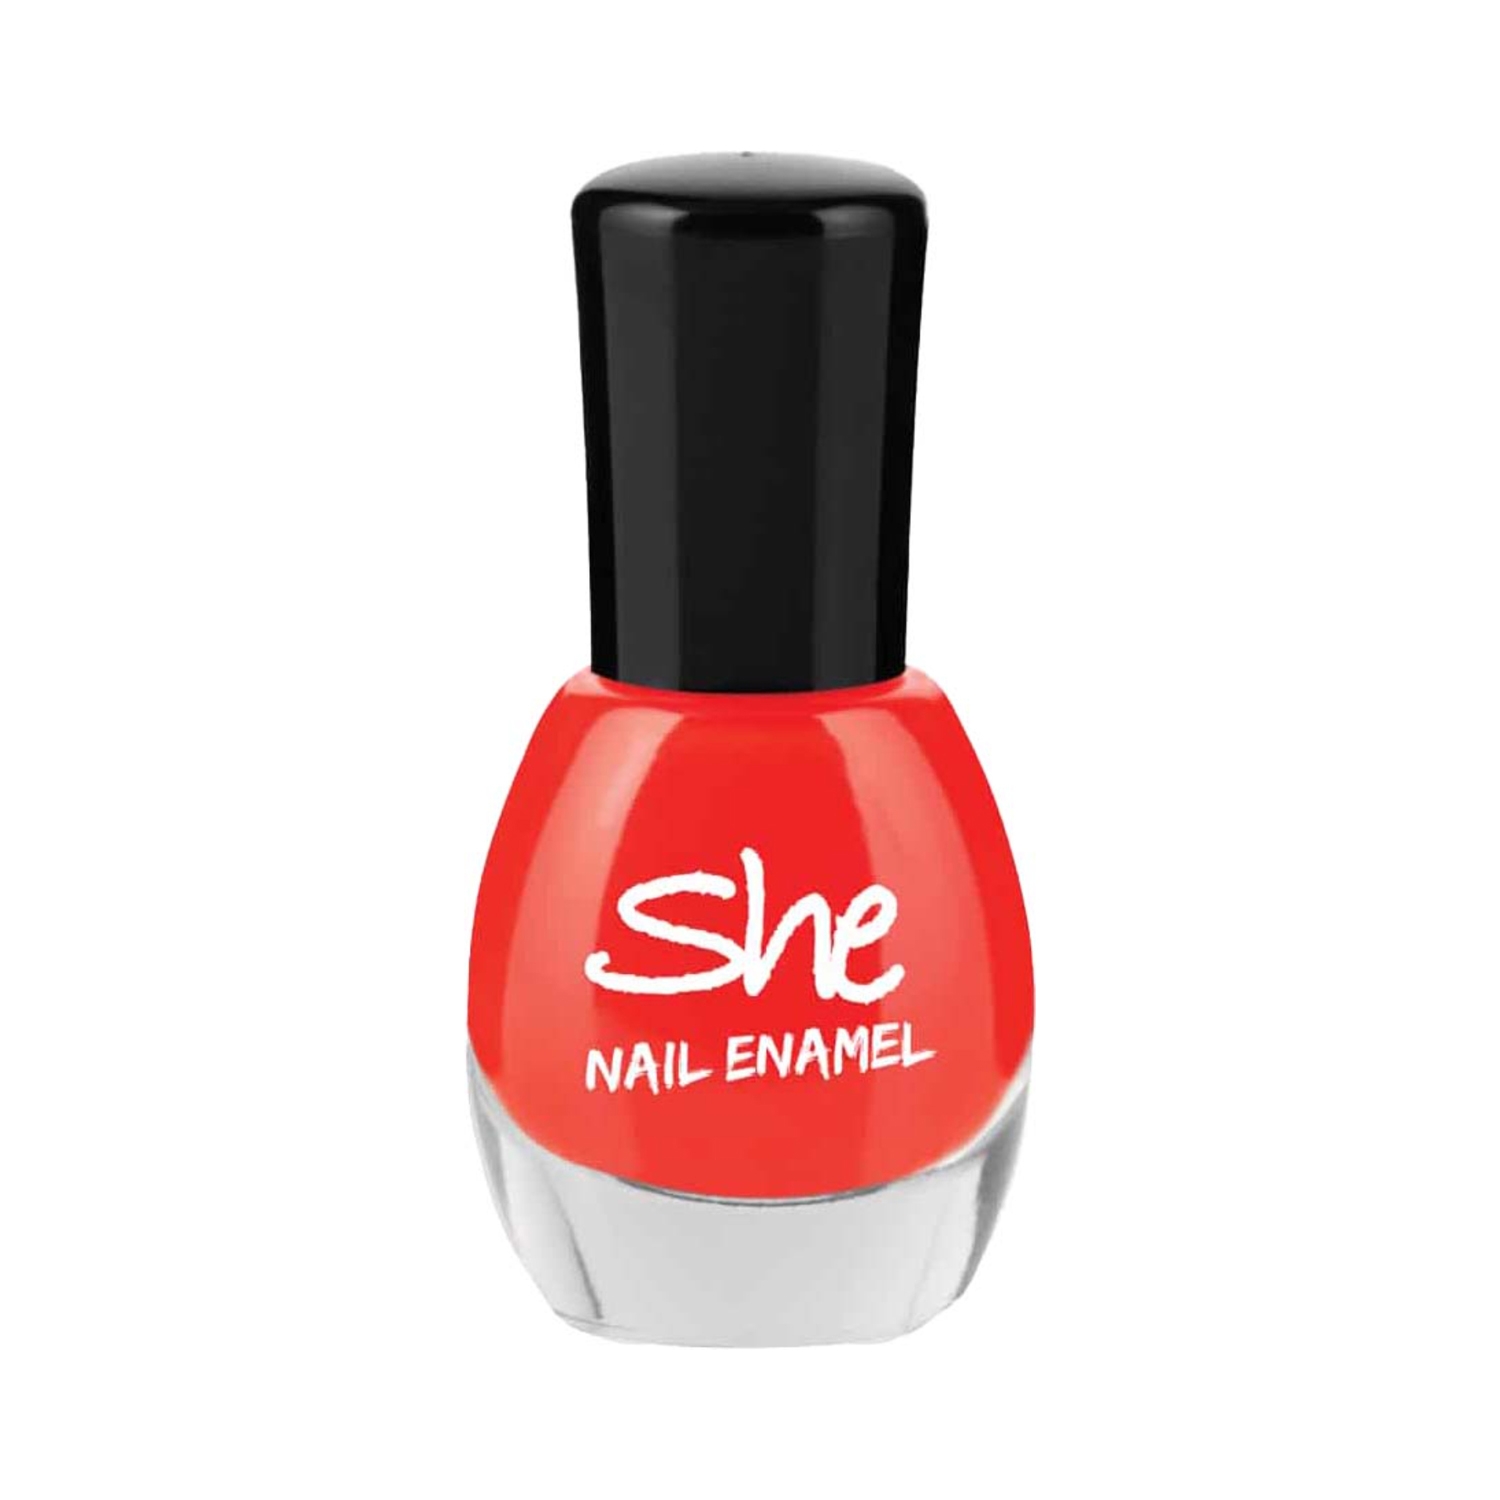 She | She Makeup Nail Enamel - 213 Tangerine (8ml)